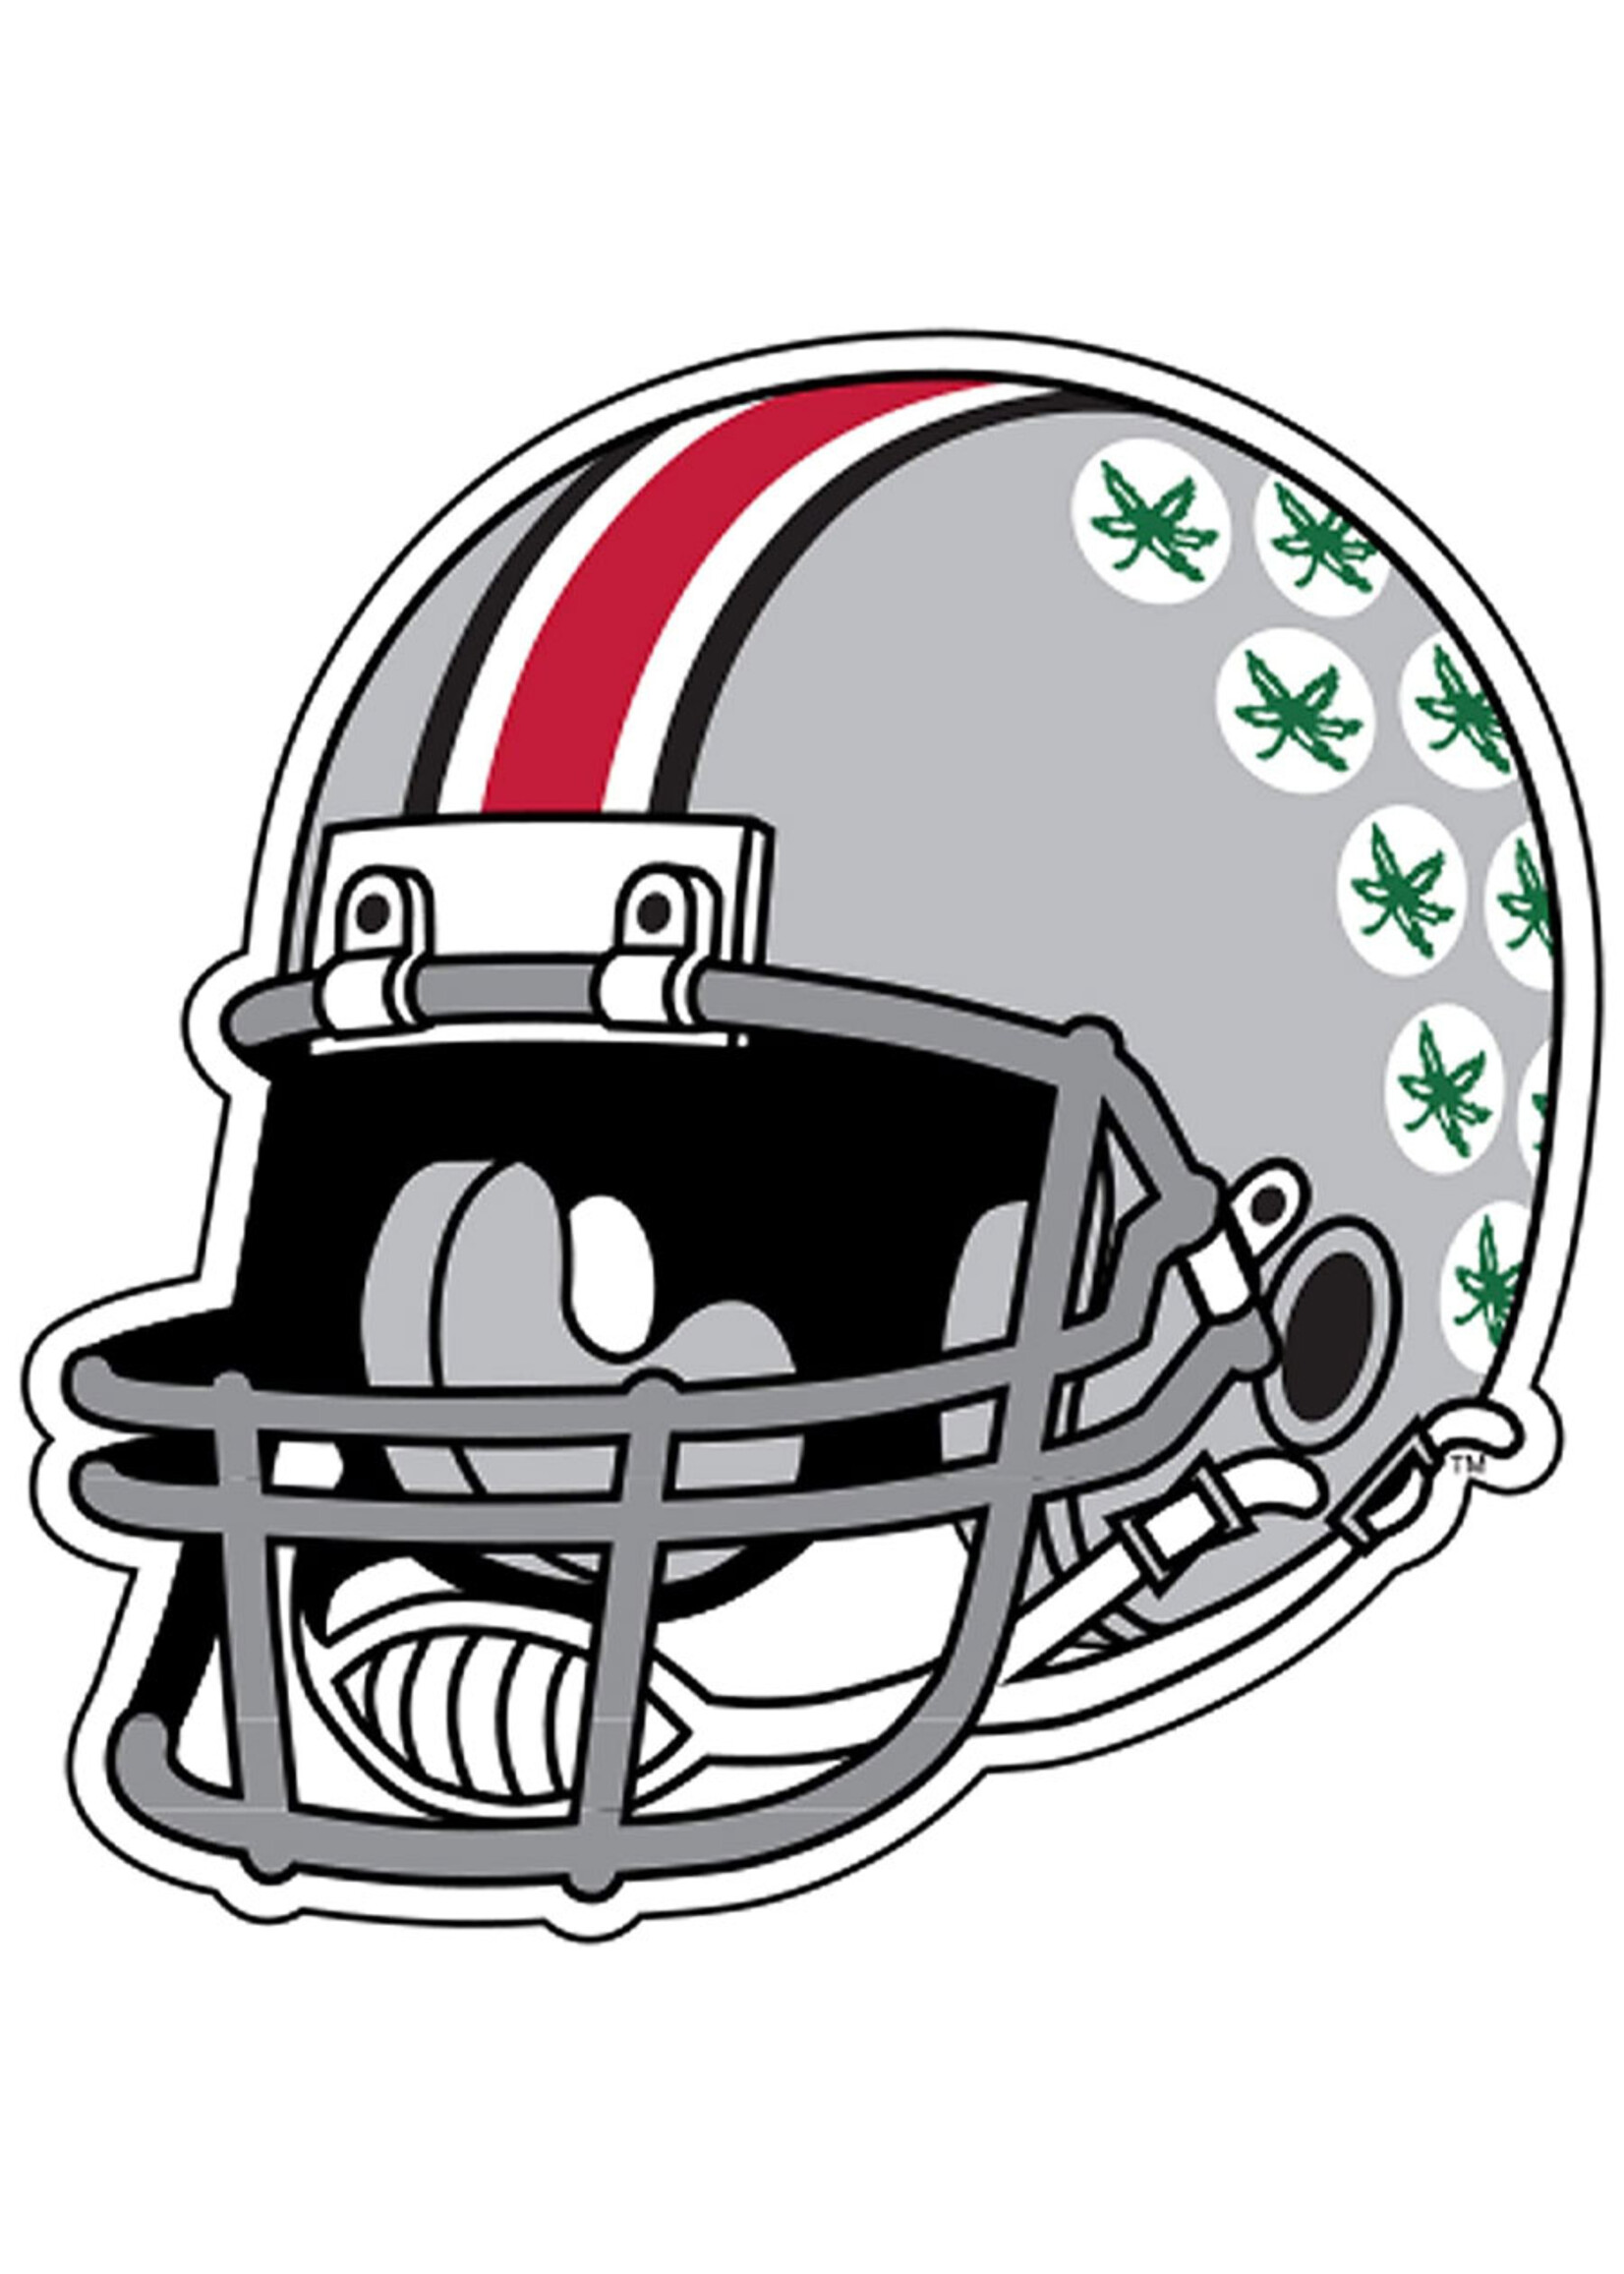 Ohio State Buckeyes 9" Helmet Magnet